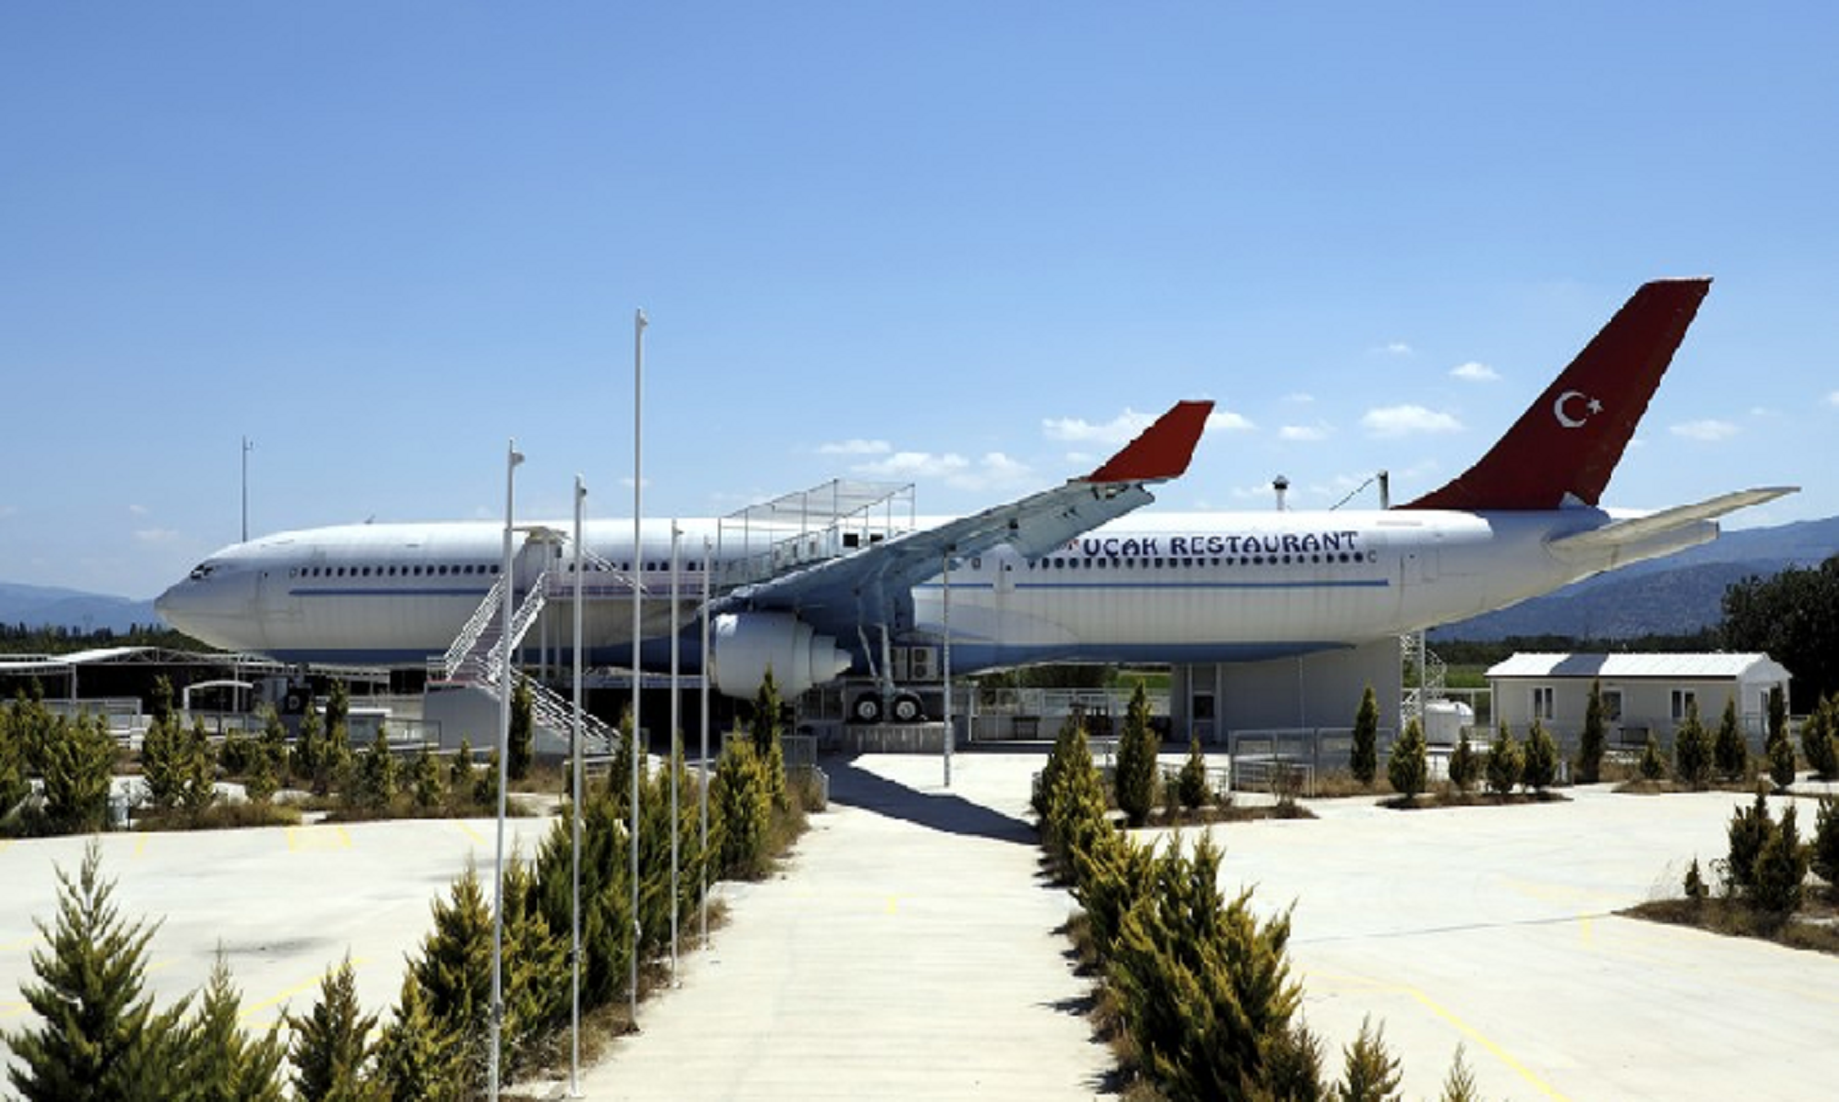 Turkey’s Largest Air Plane Restaurant On Sale For 1.4 Million U.S. Dollars